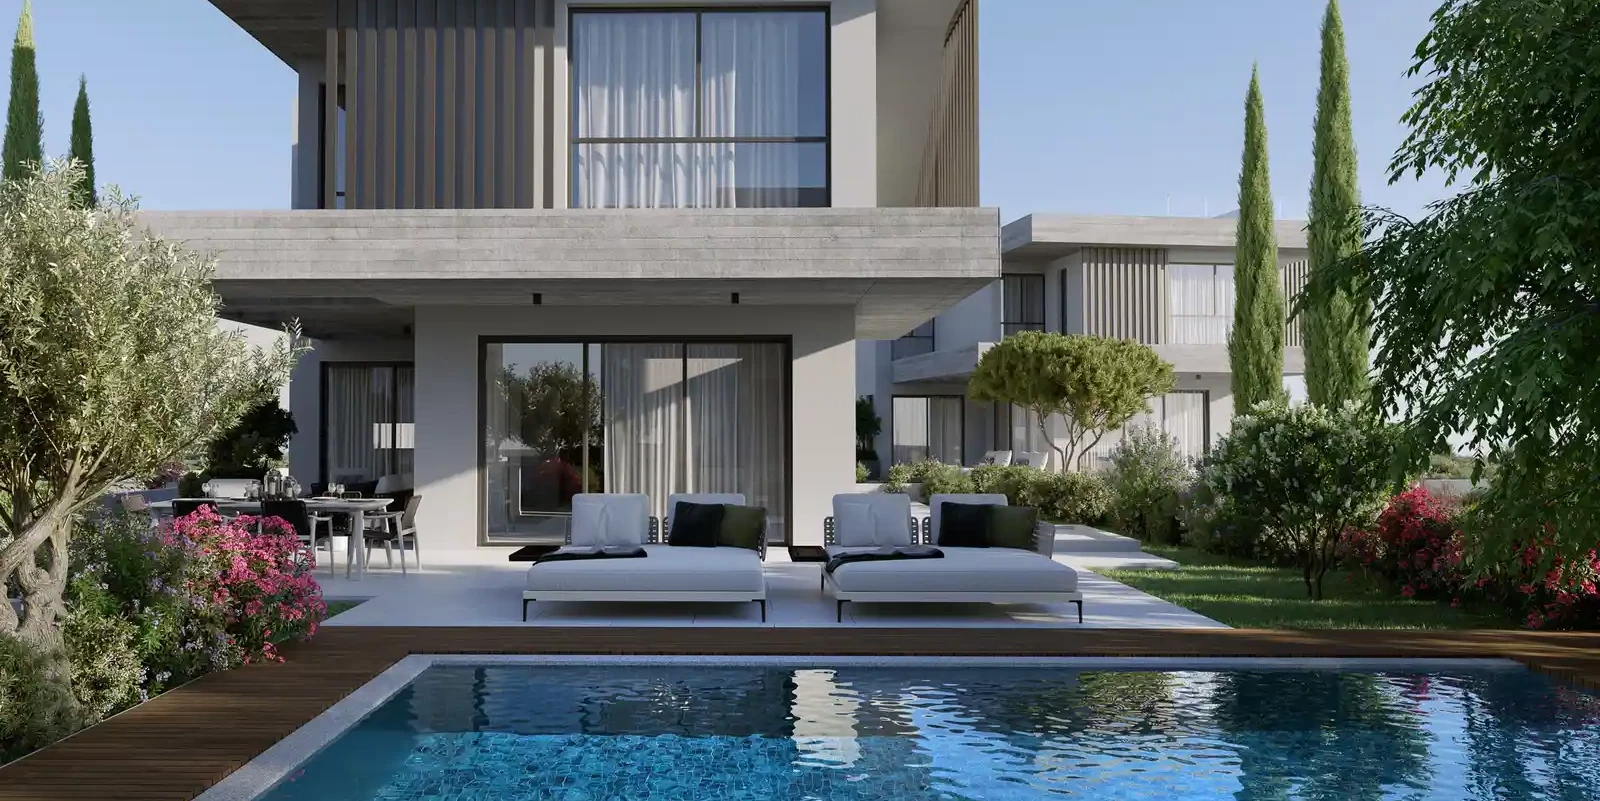 3-bedroom villa fоr sаle €530.000, image 1